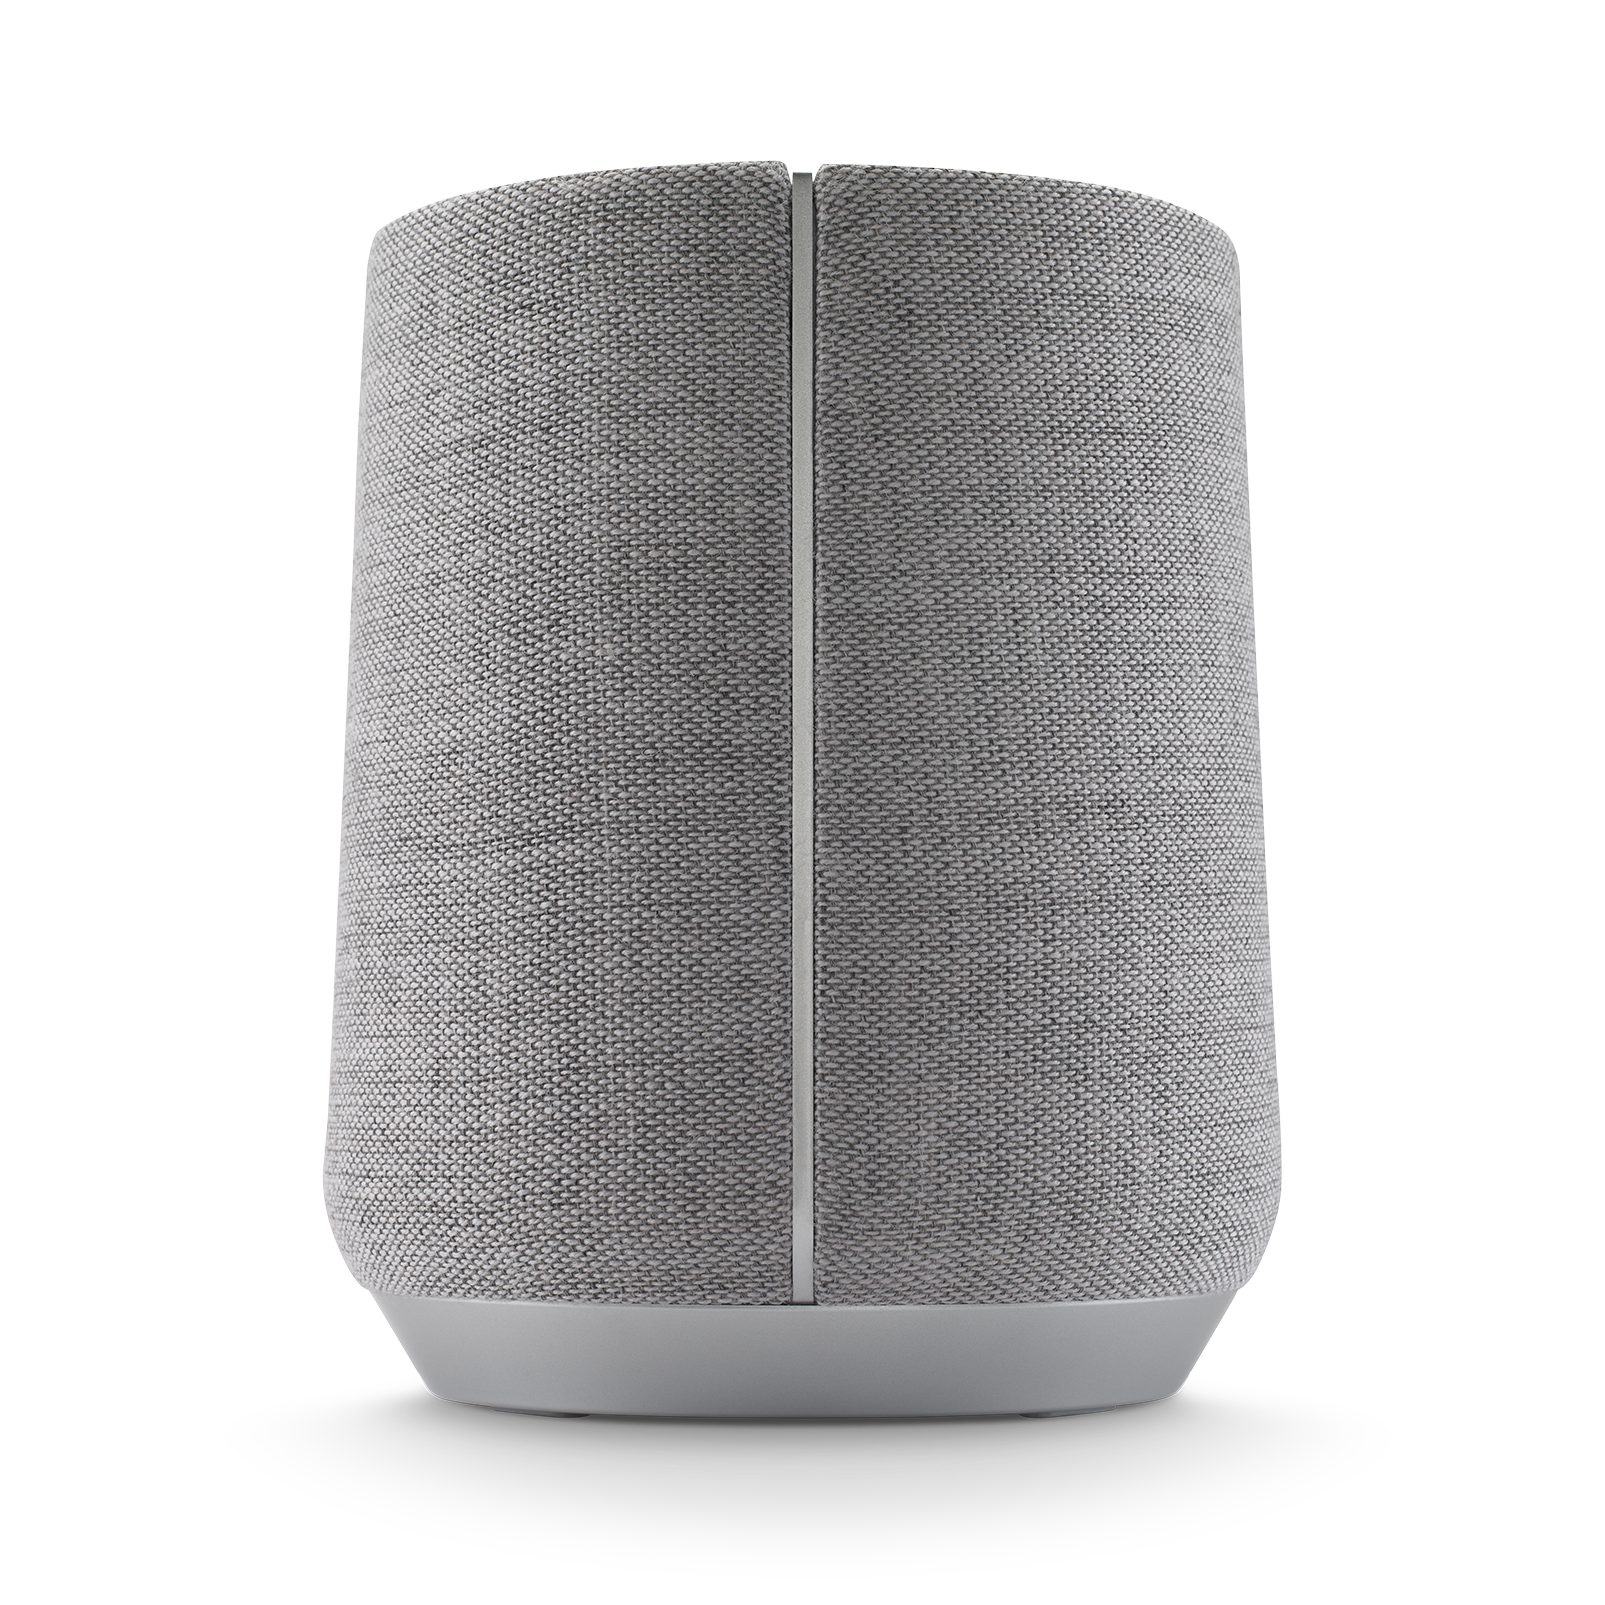 Harman Kardon Citation 300 - Grey - The medium-size smart home speaker with award winning design - Detailshot 3